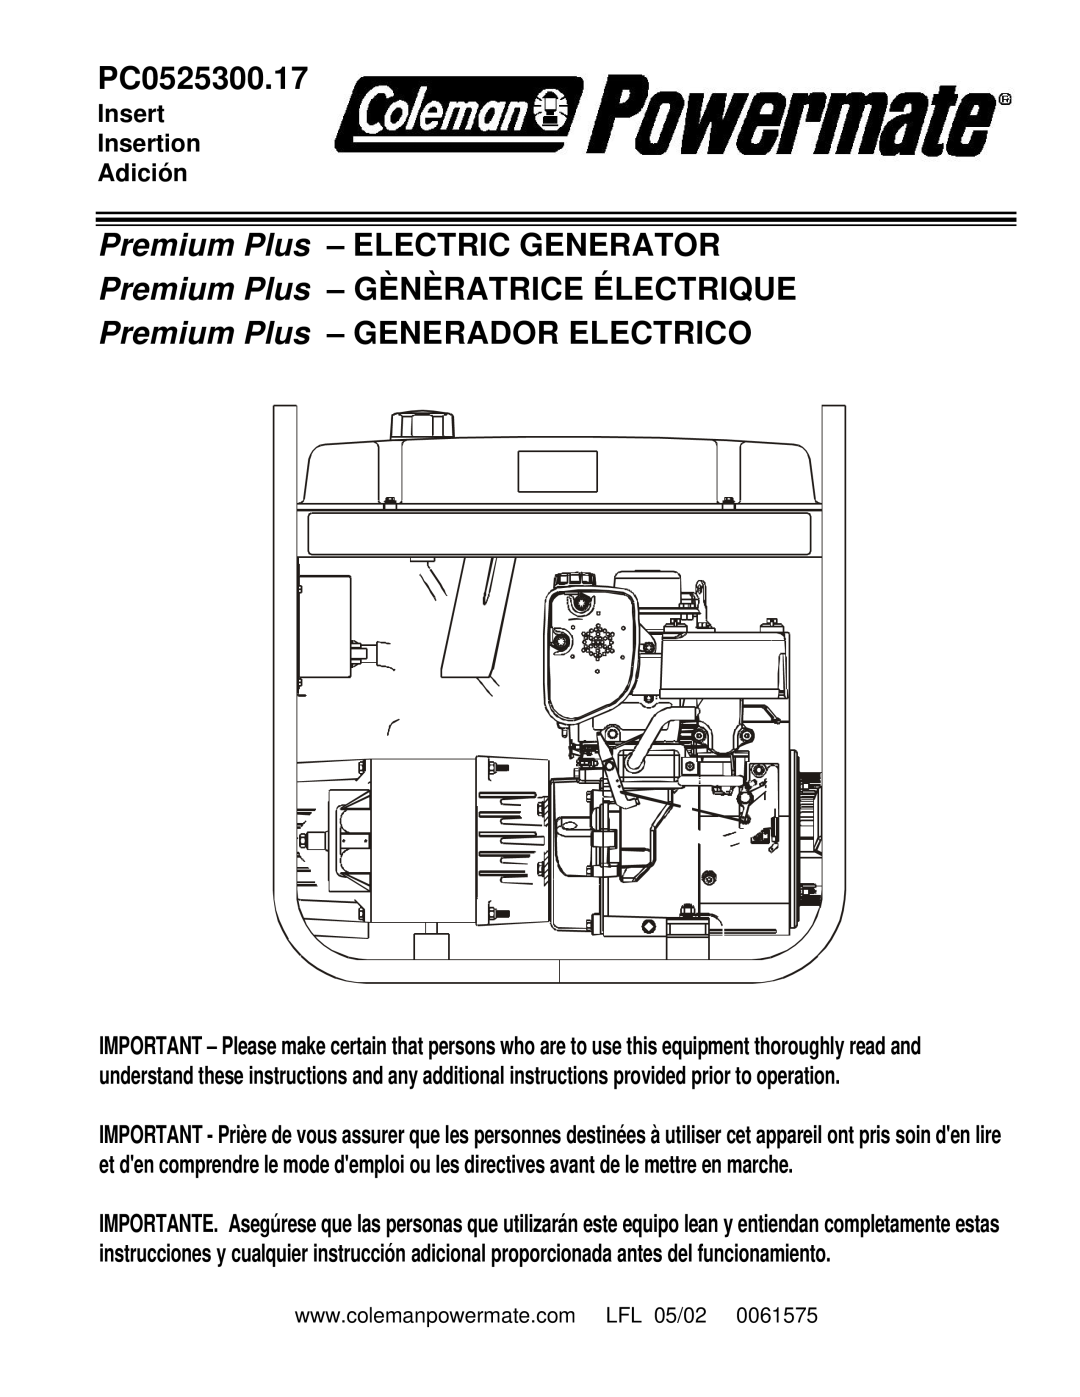 Powermate PC0525300.17 manual Premium Plus - ELECTRIC GENERATOR, Premium Plus - GÈNÈRATRICE ÉLECTRIQUE 